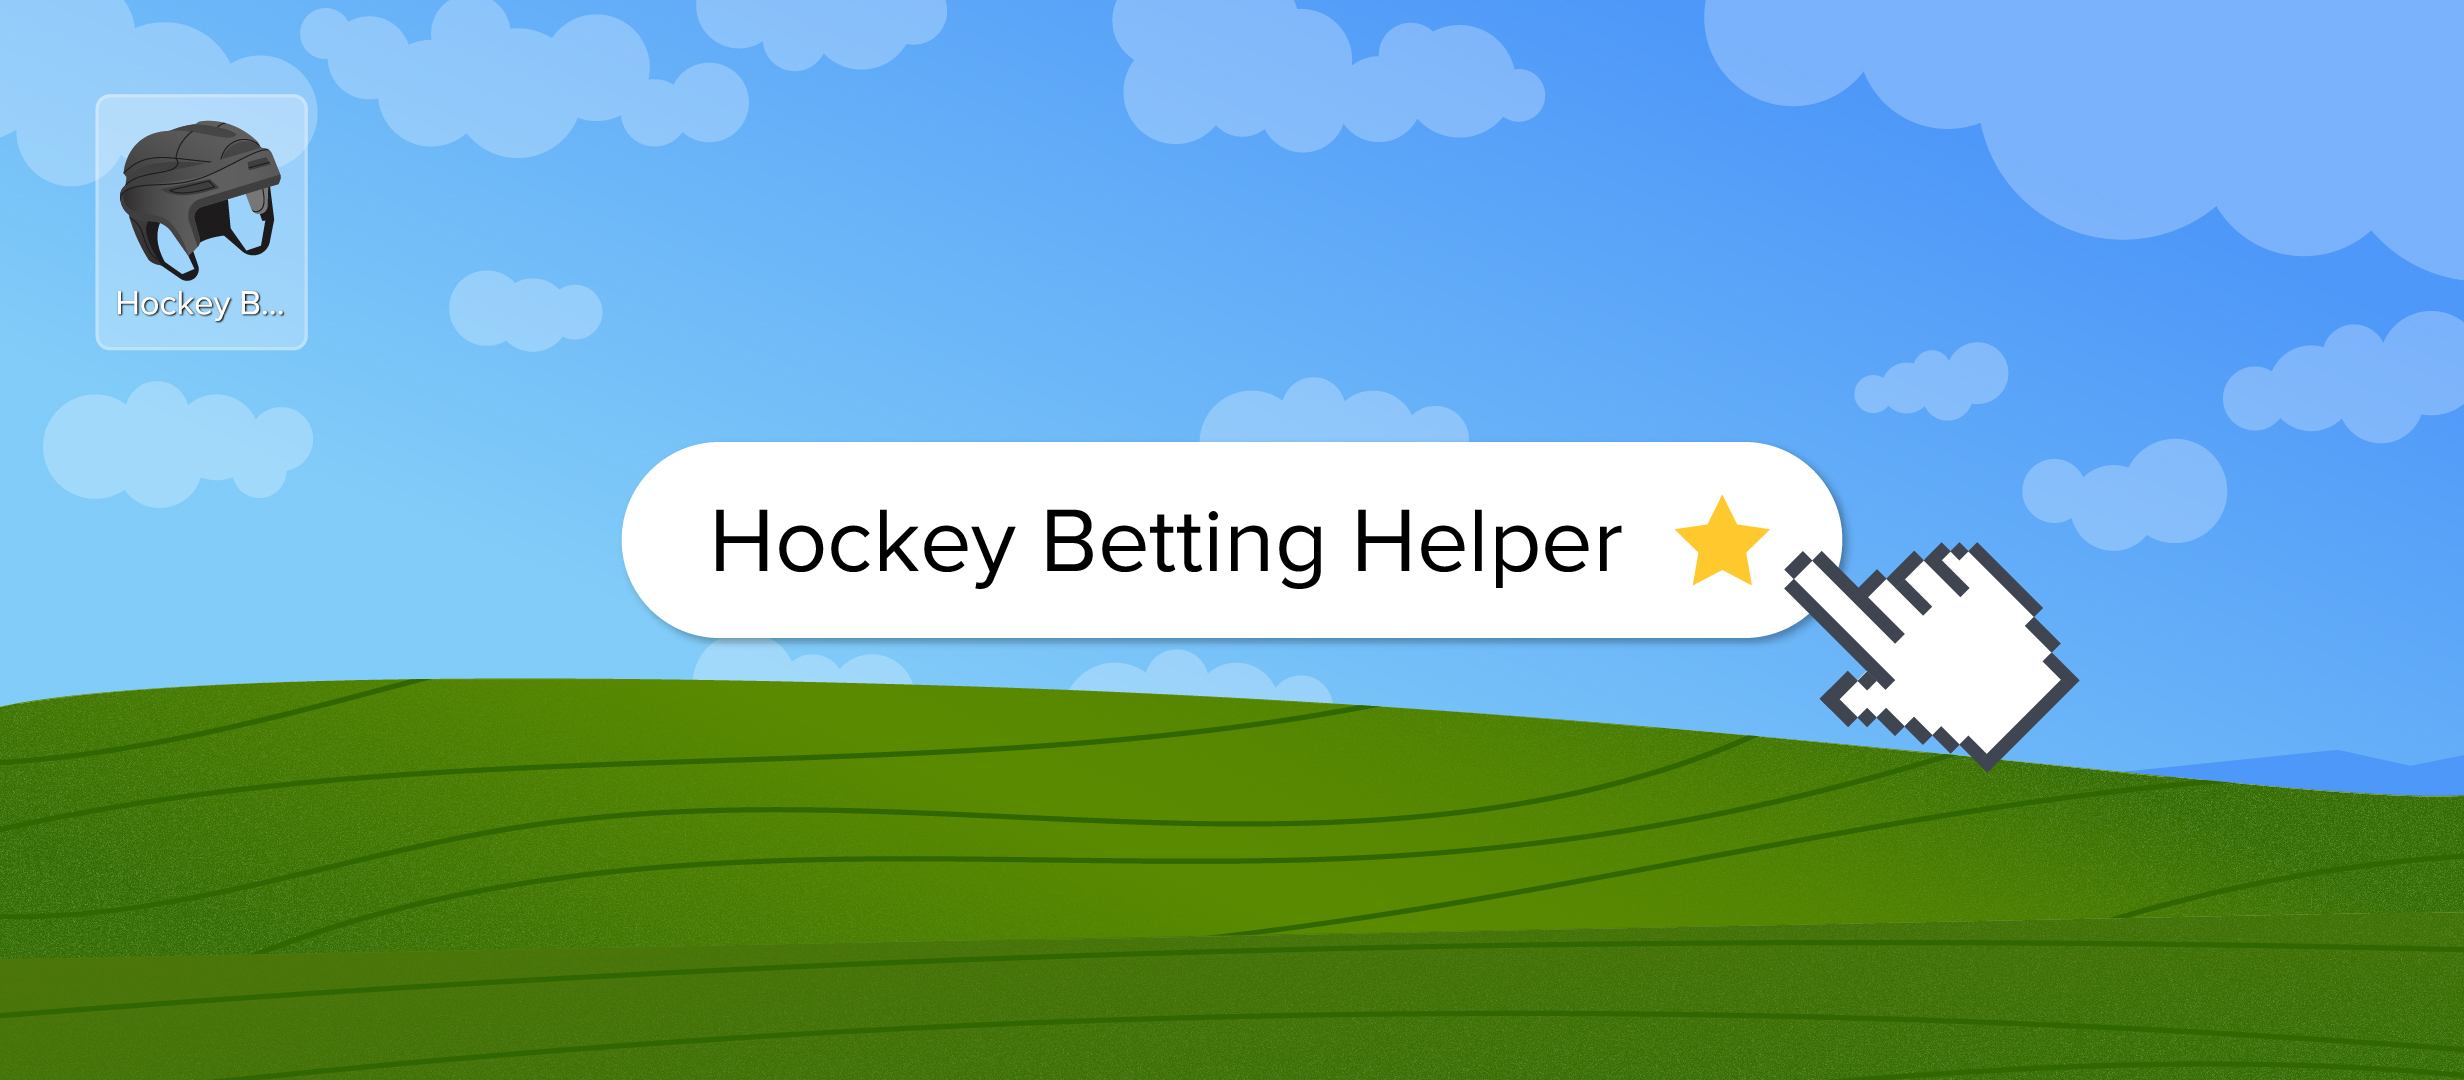 Полезные сайты для ставок на спорт: Hockey Betting Helper